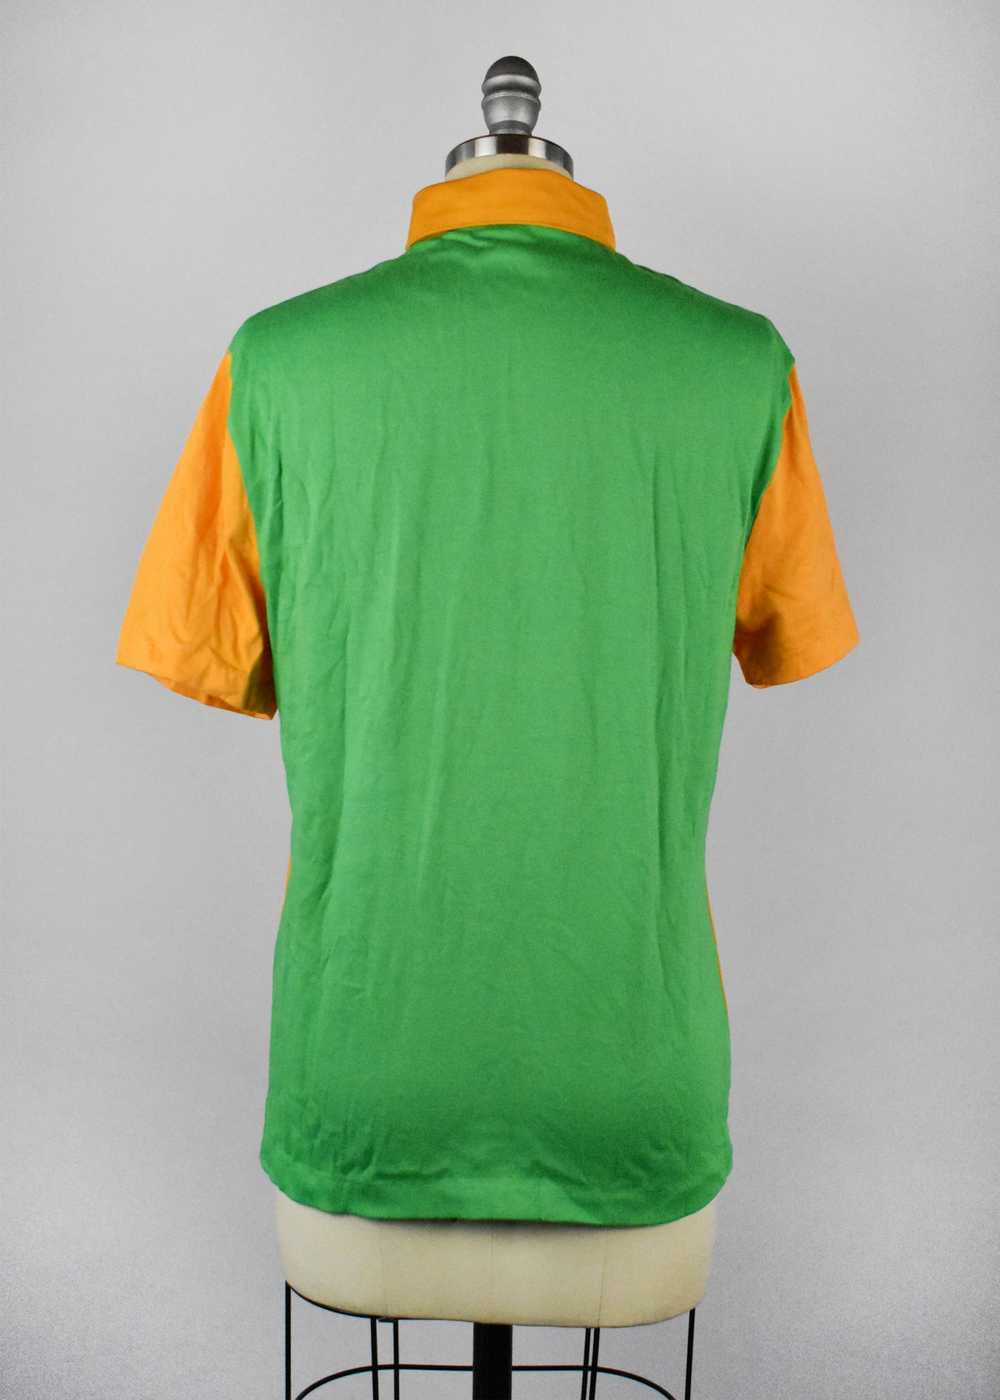 Levi's 1984 Los Angeles Olympics Polo Shirt - image 7